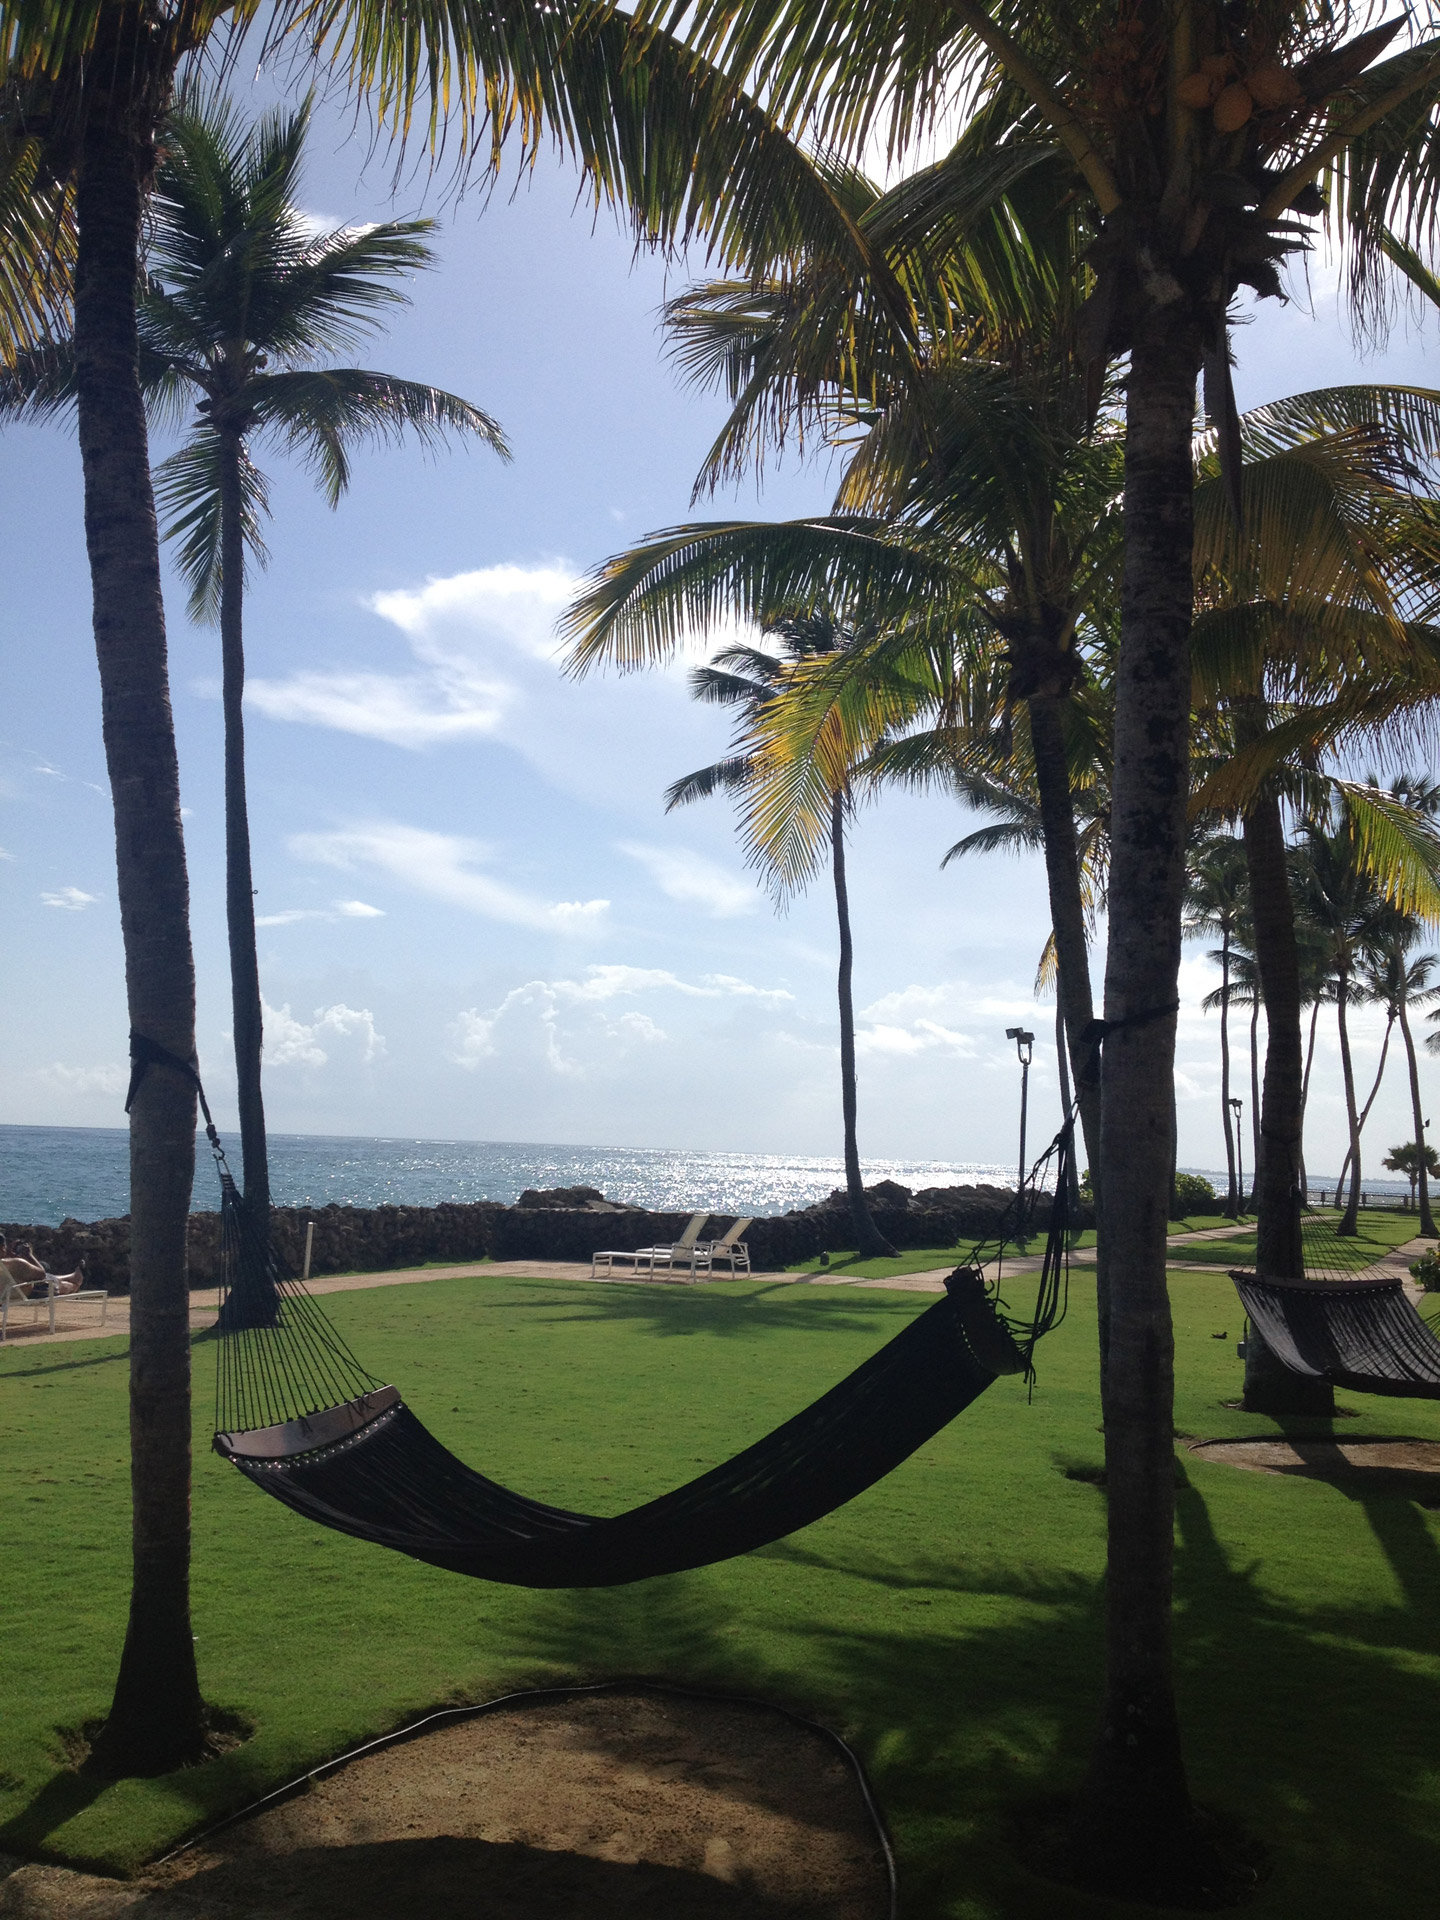 Seaside hammock in San Juan, Puerto Rico